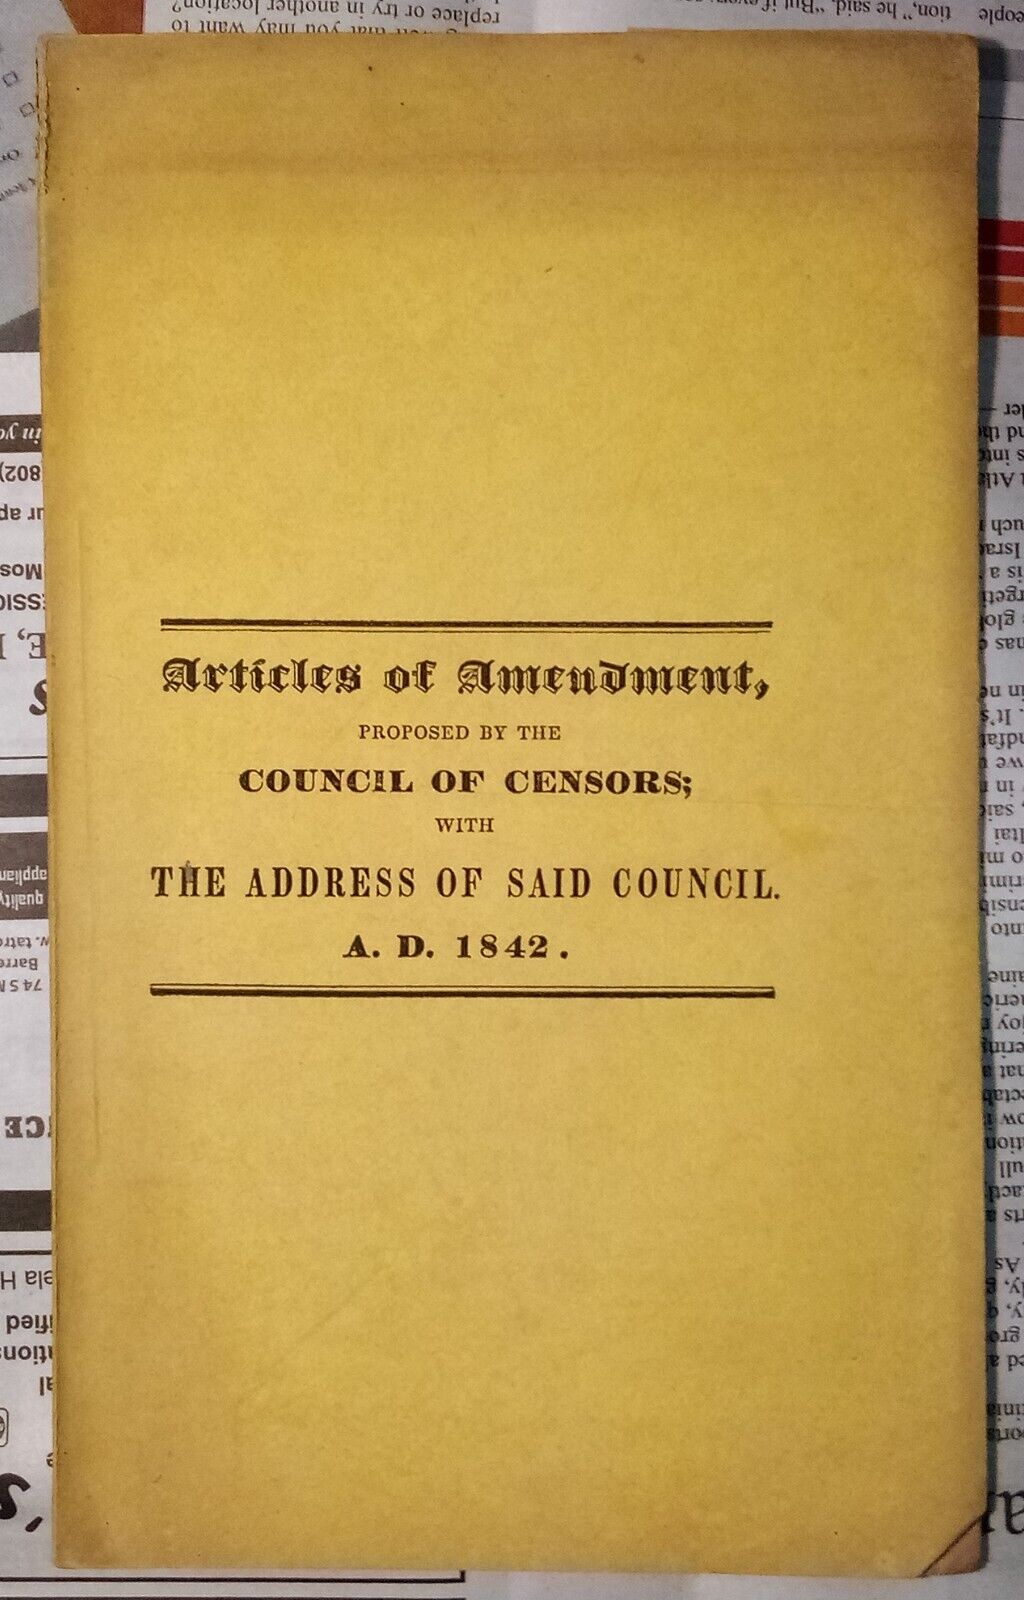 VERMONT - Articles of Amendment - 1842